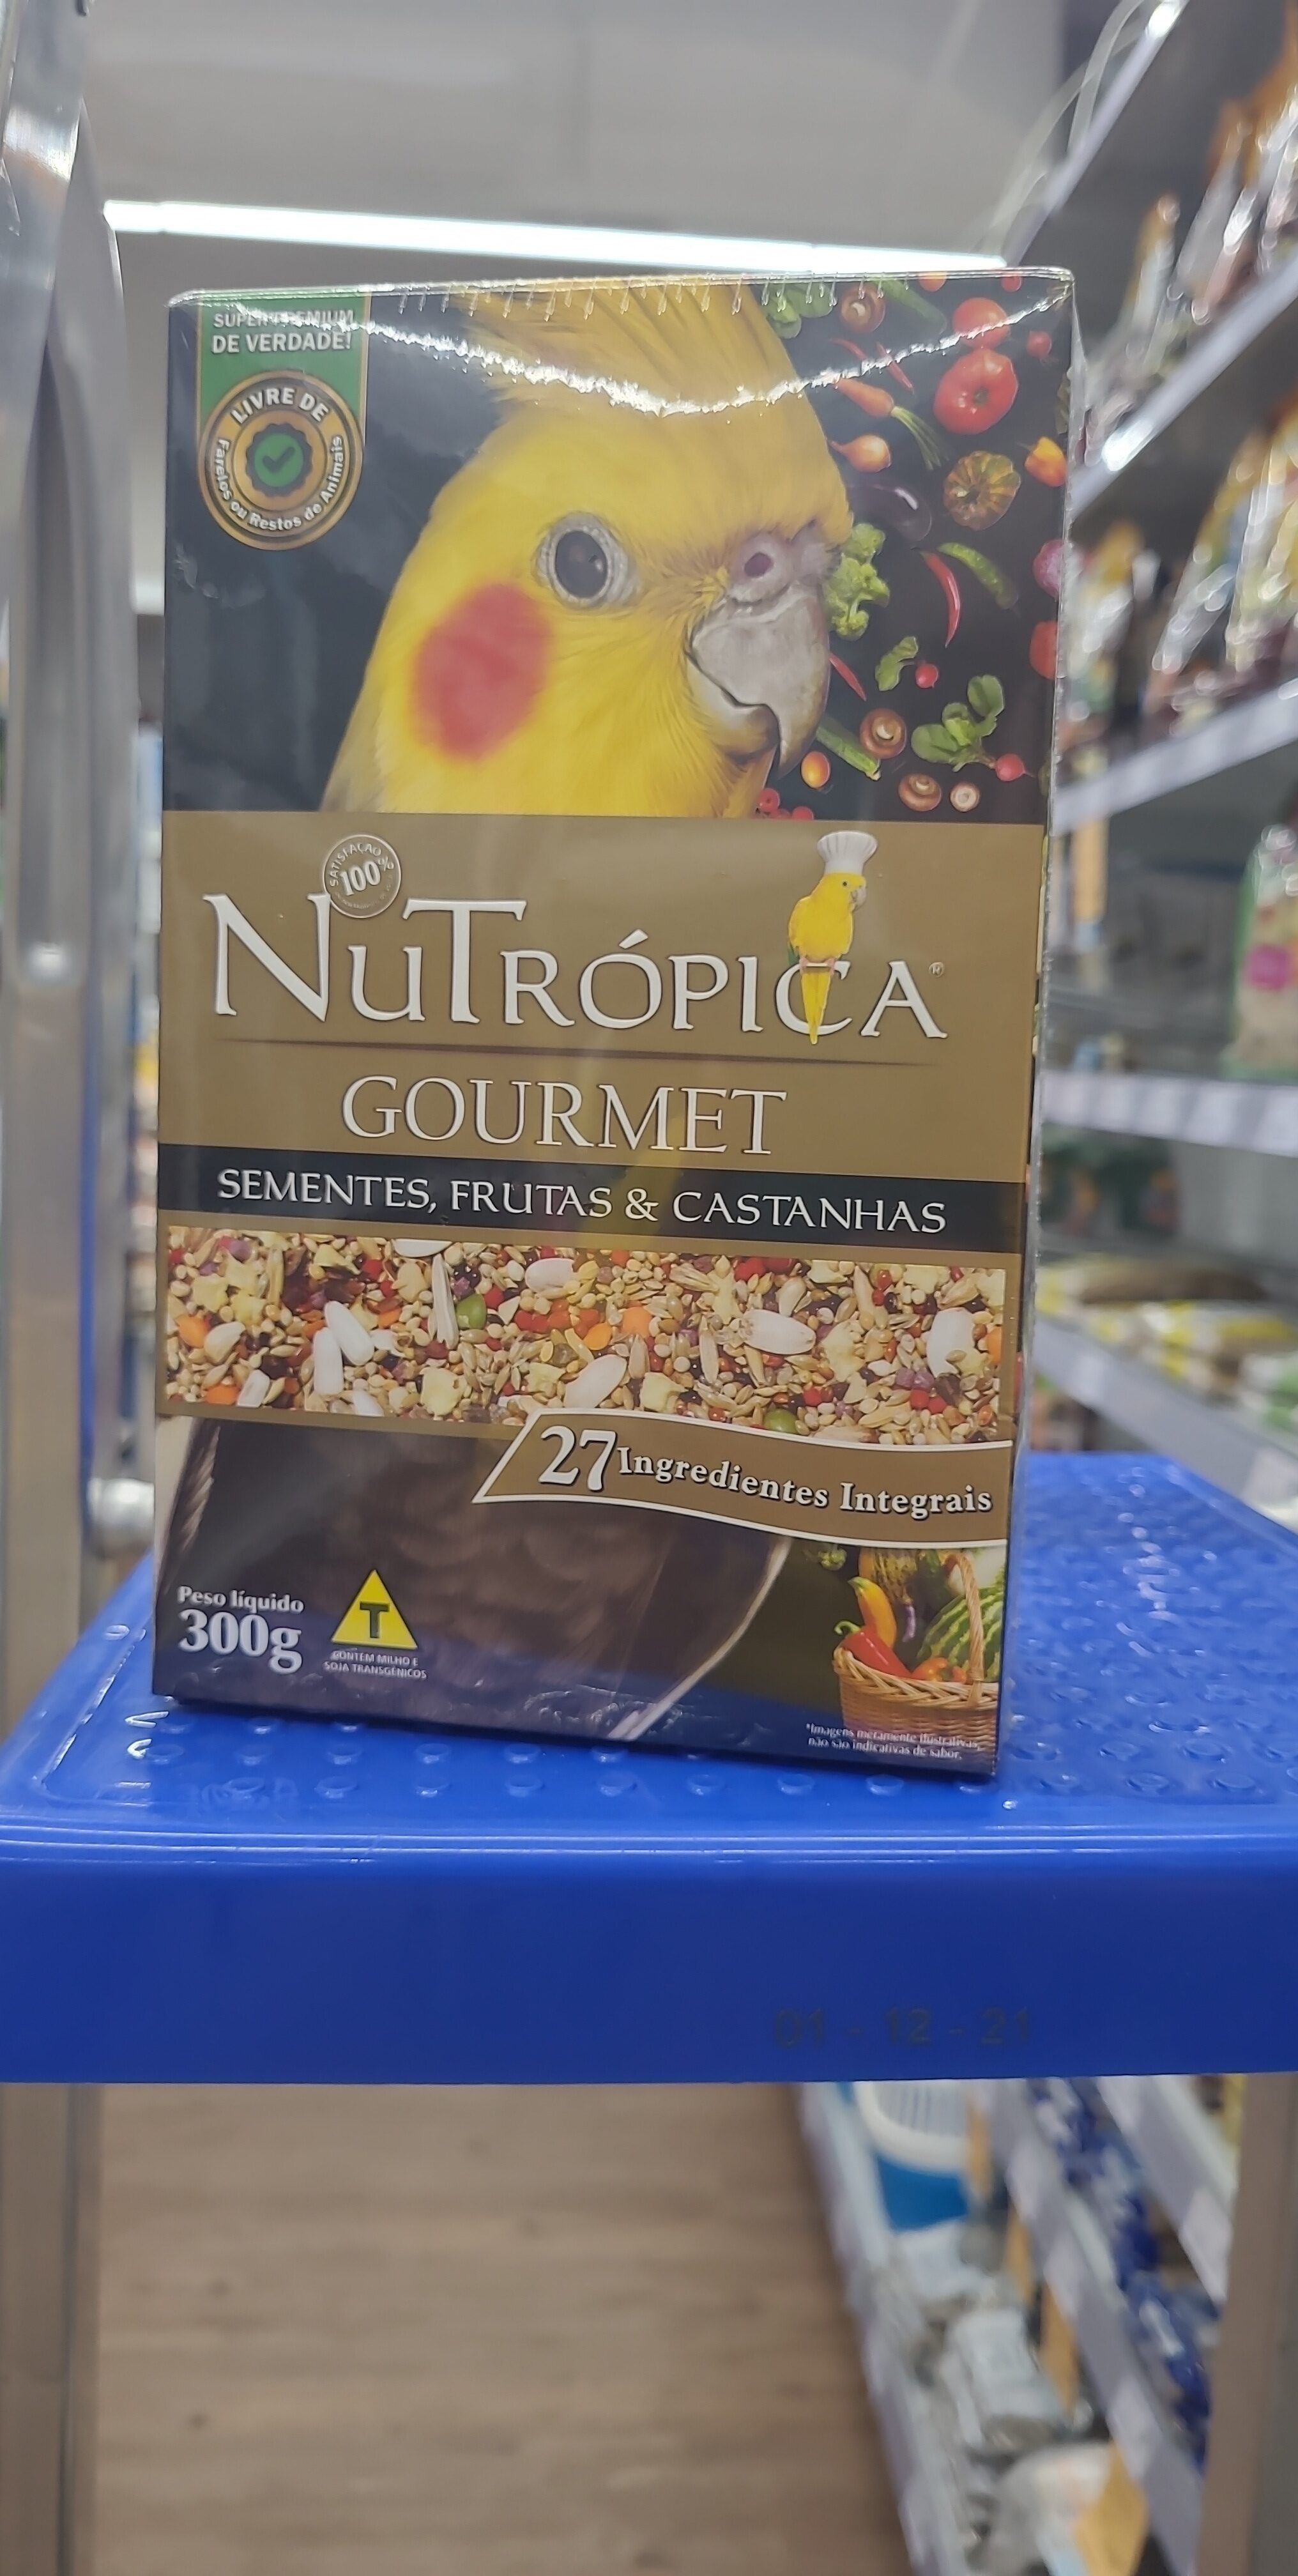 Nutropica gourmet calopsita 300g - Product - pt